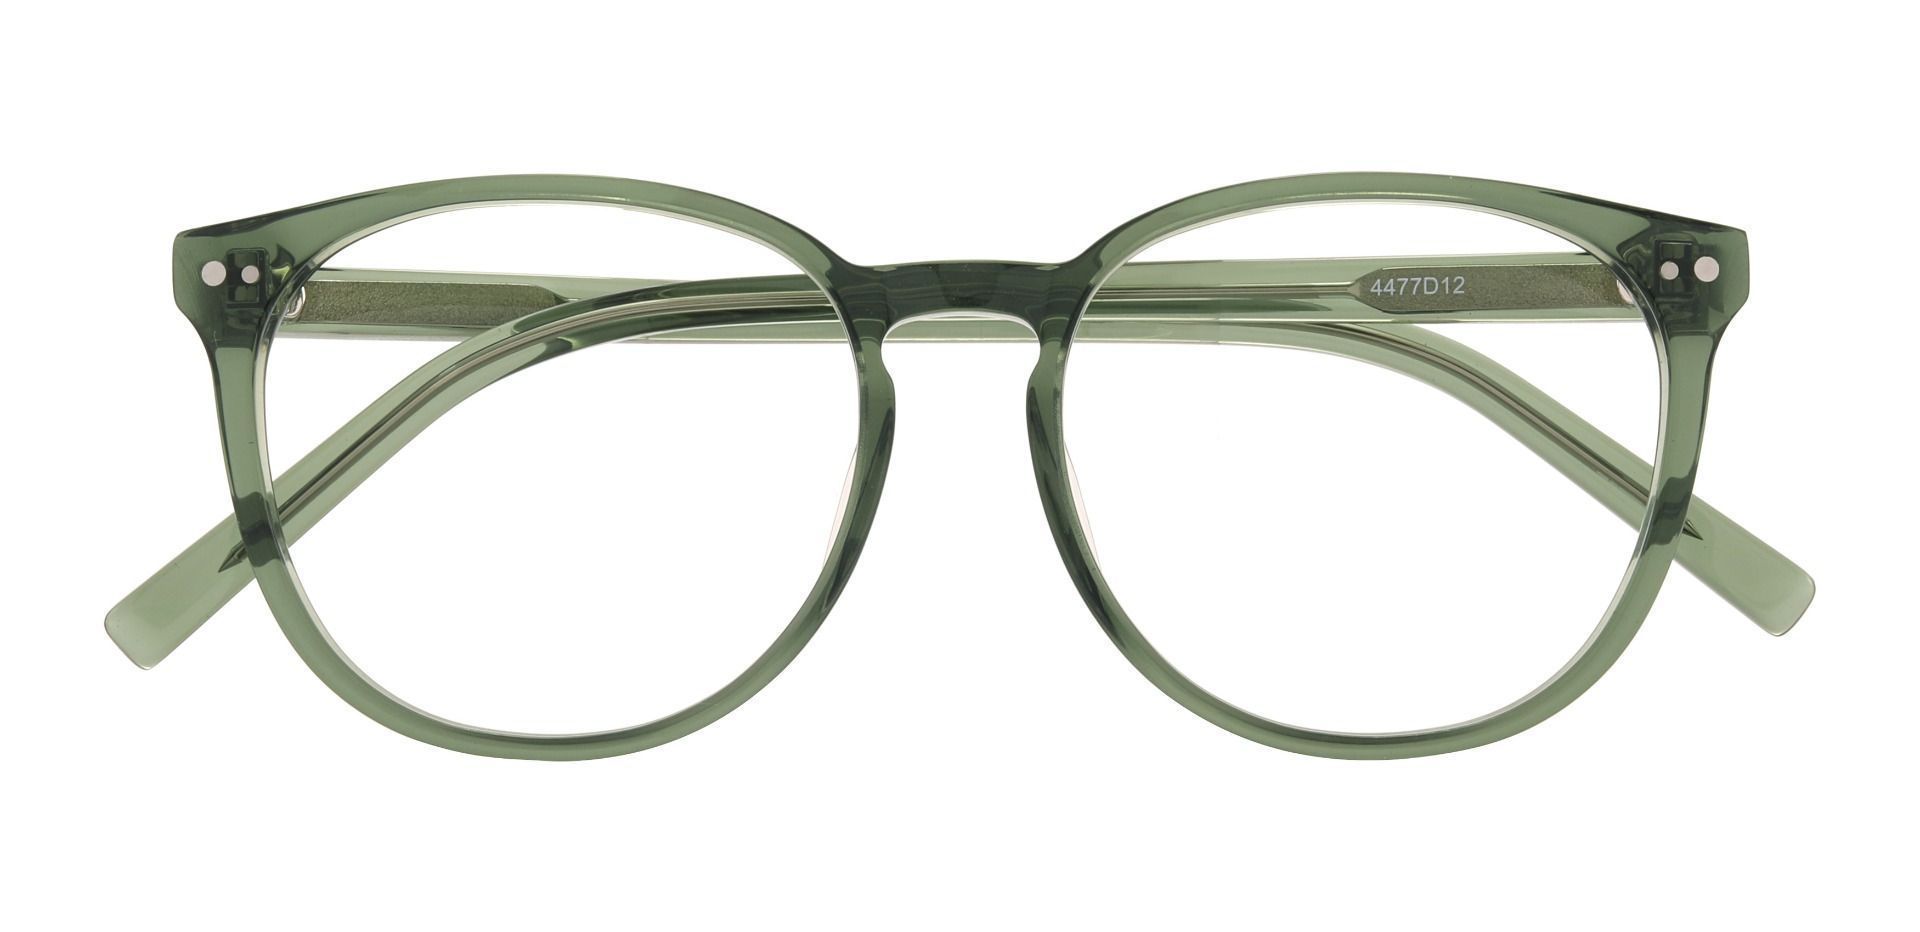 Herron Oval Prescription Glasses - Green